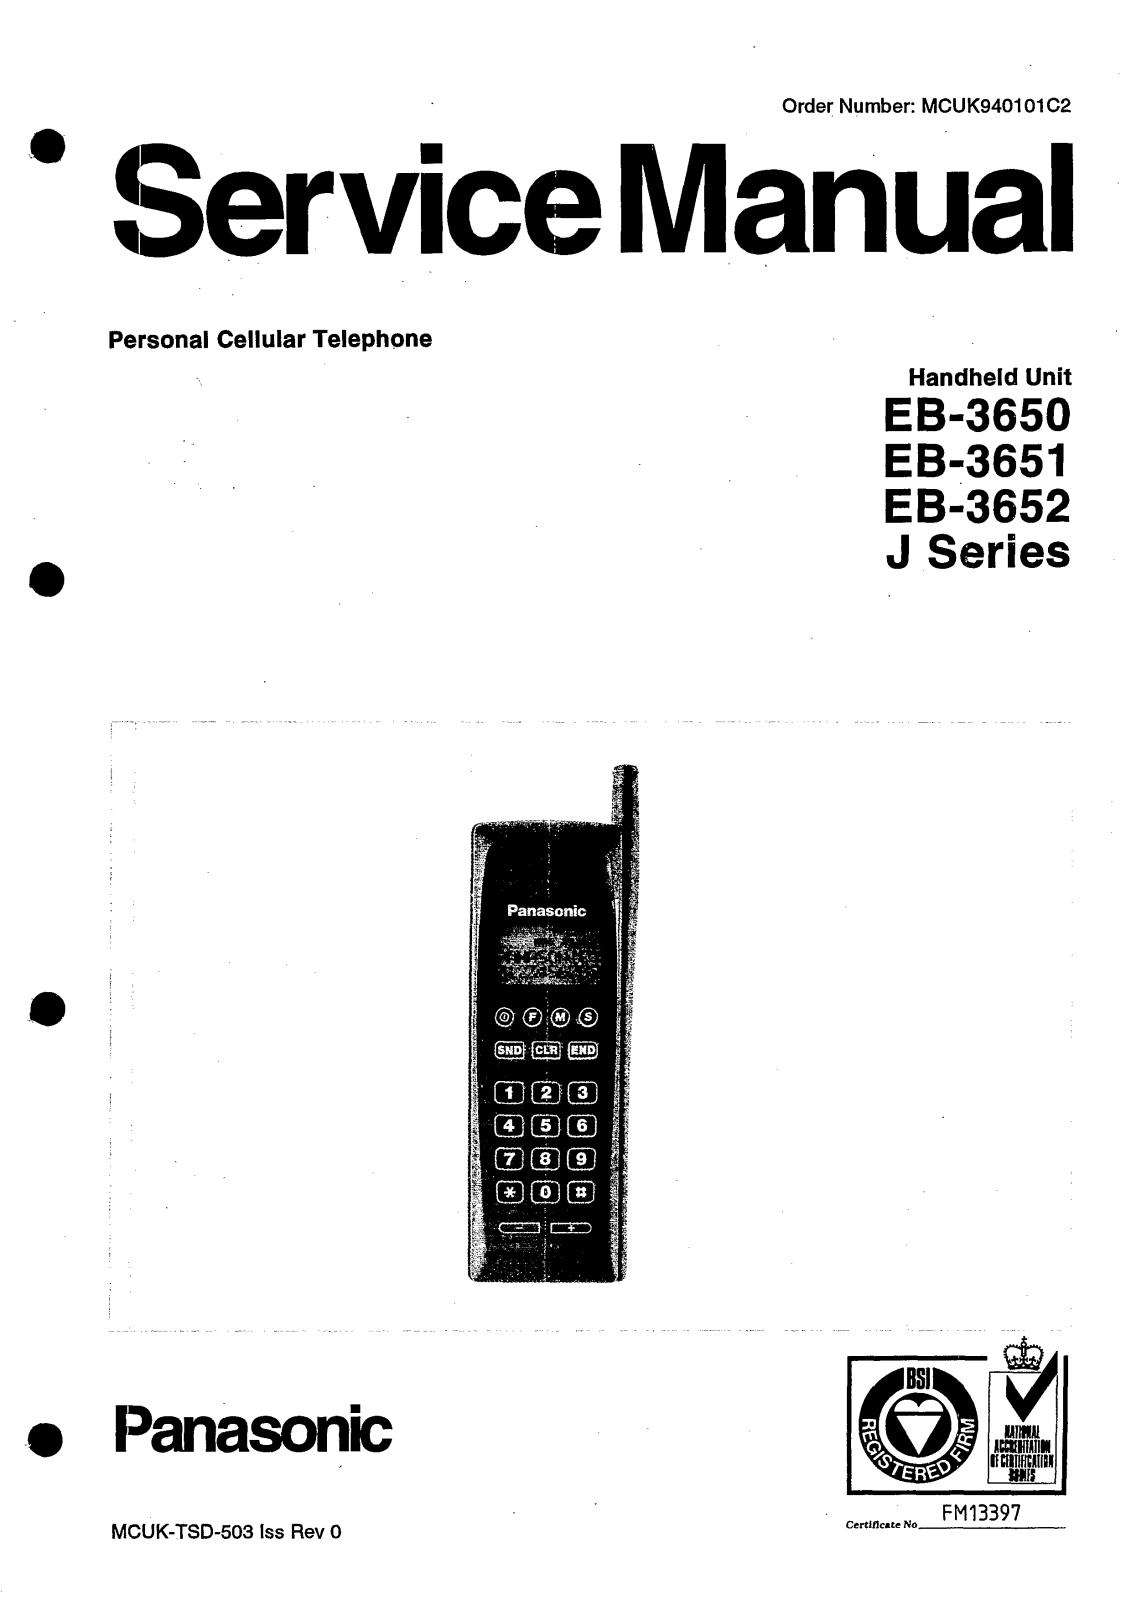 Panasonic EB-3652, EB-3651, EB-3650 Service Manual